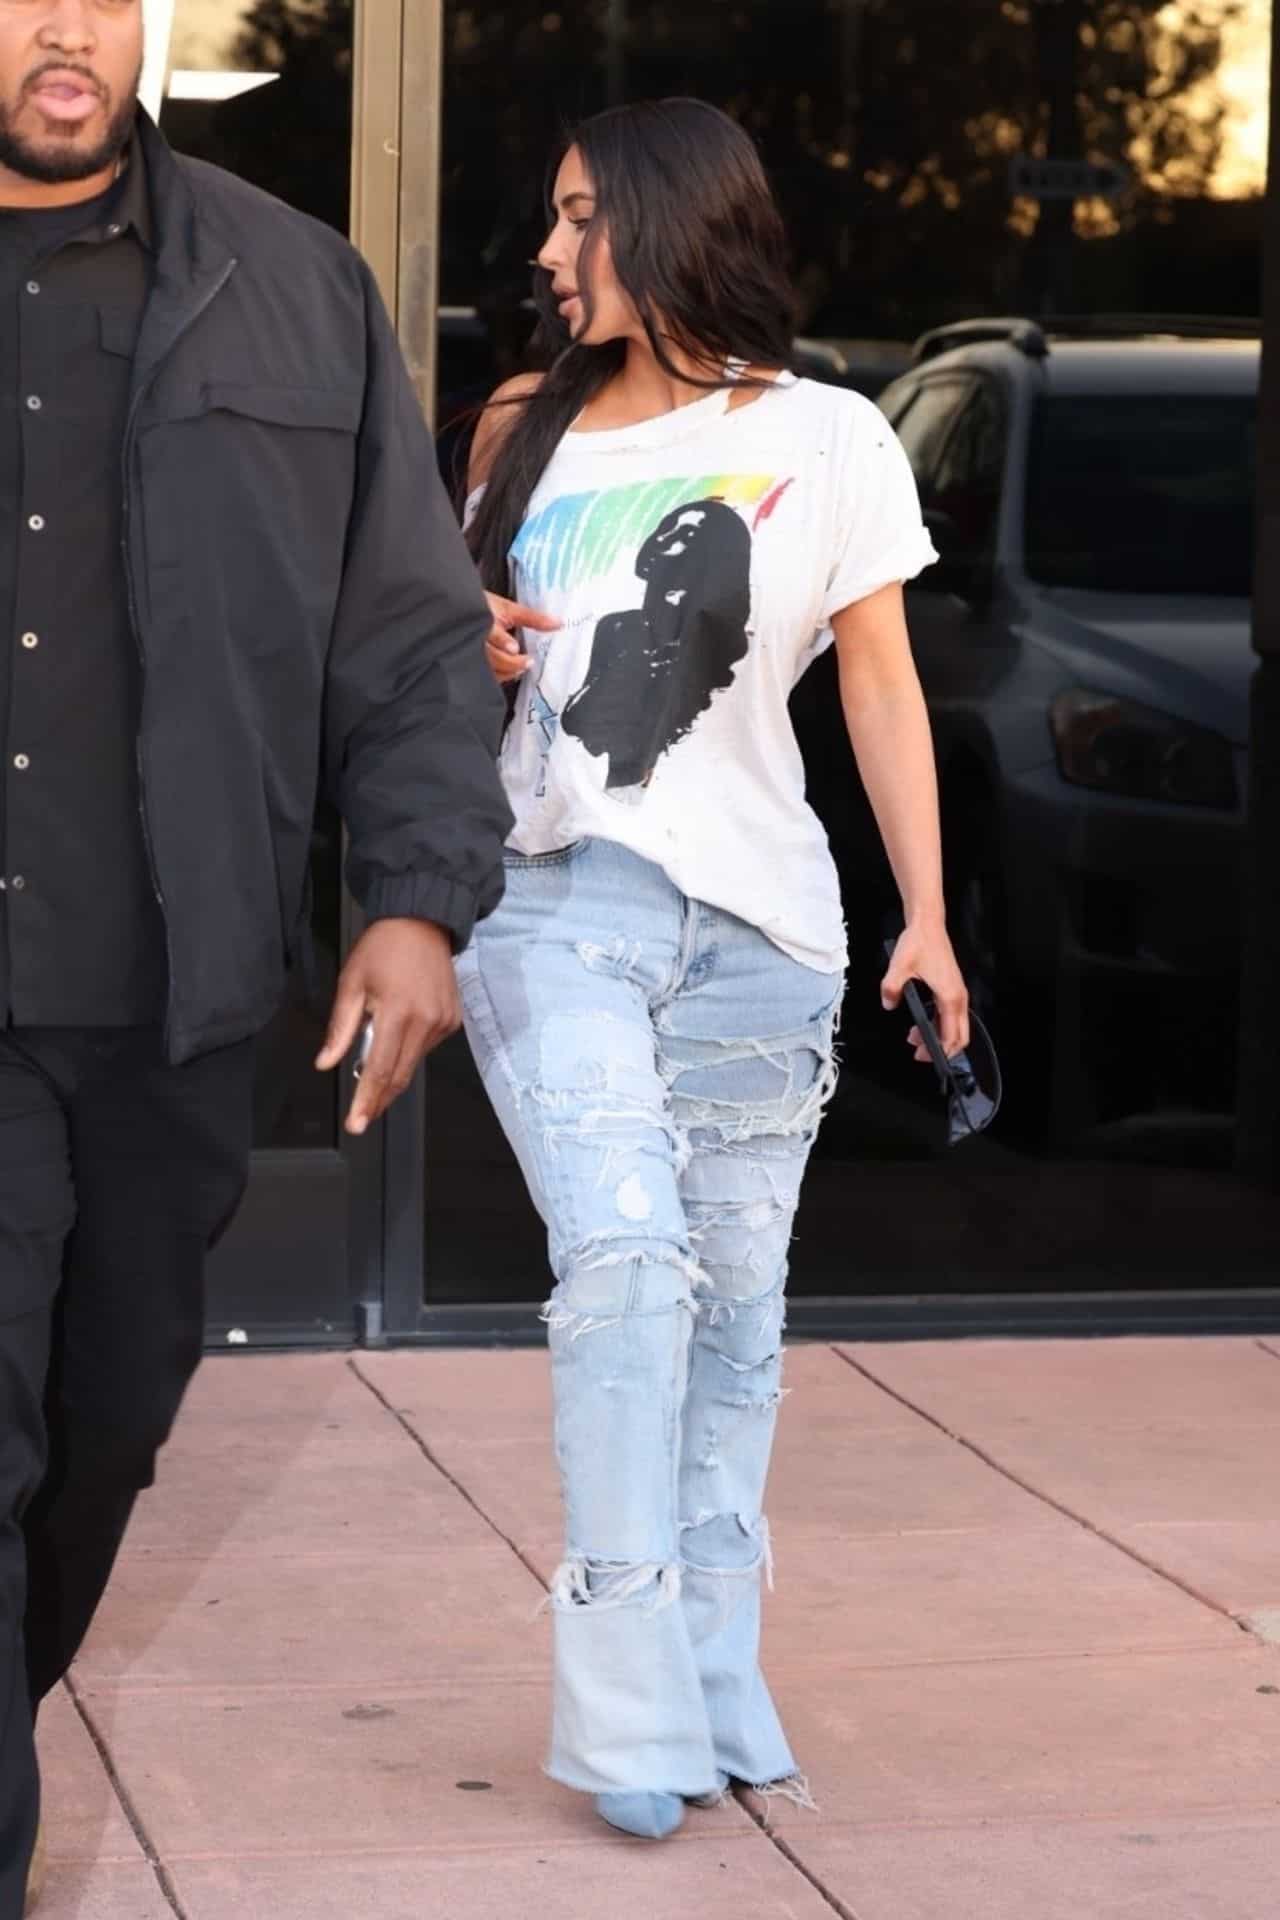 Kim Kardashian Looks Chic in a Sade T-shirt at Saint's Basketball Game